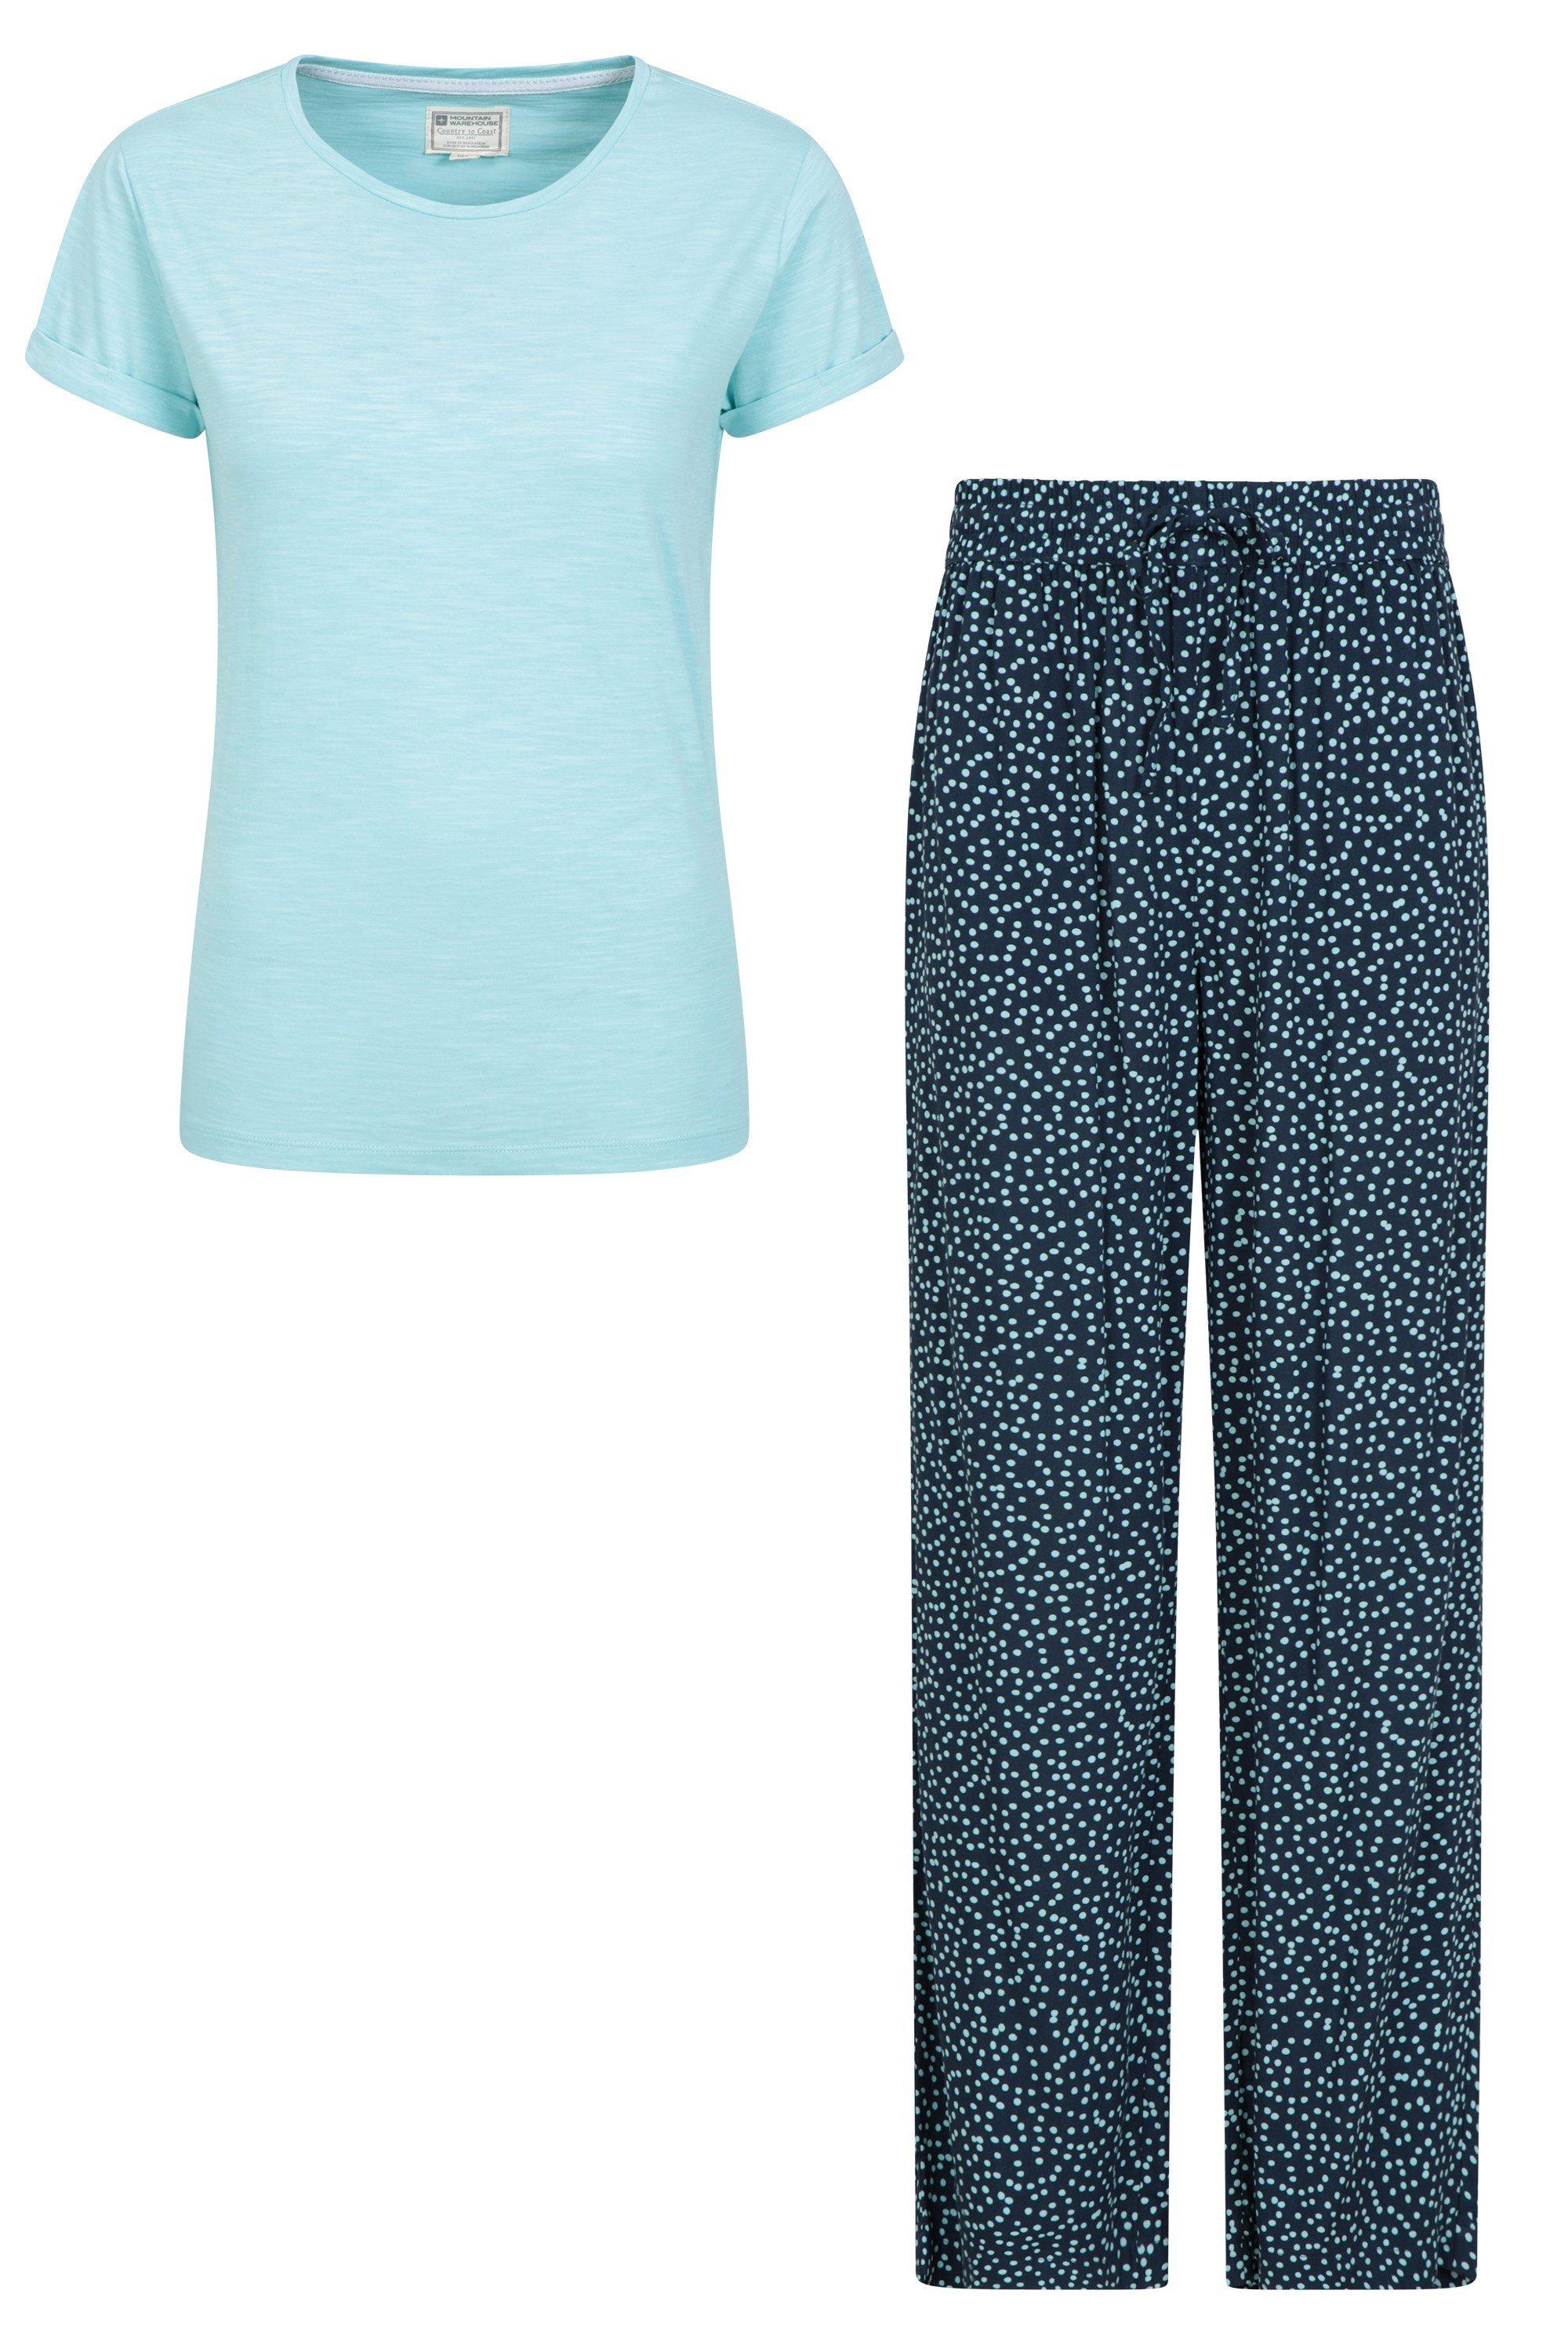 T-Shirt & Pants Pyjama Set  Relaxed Nightwear